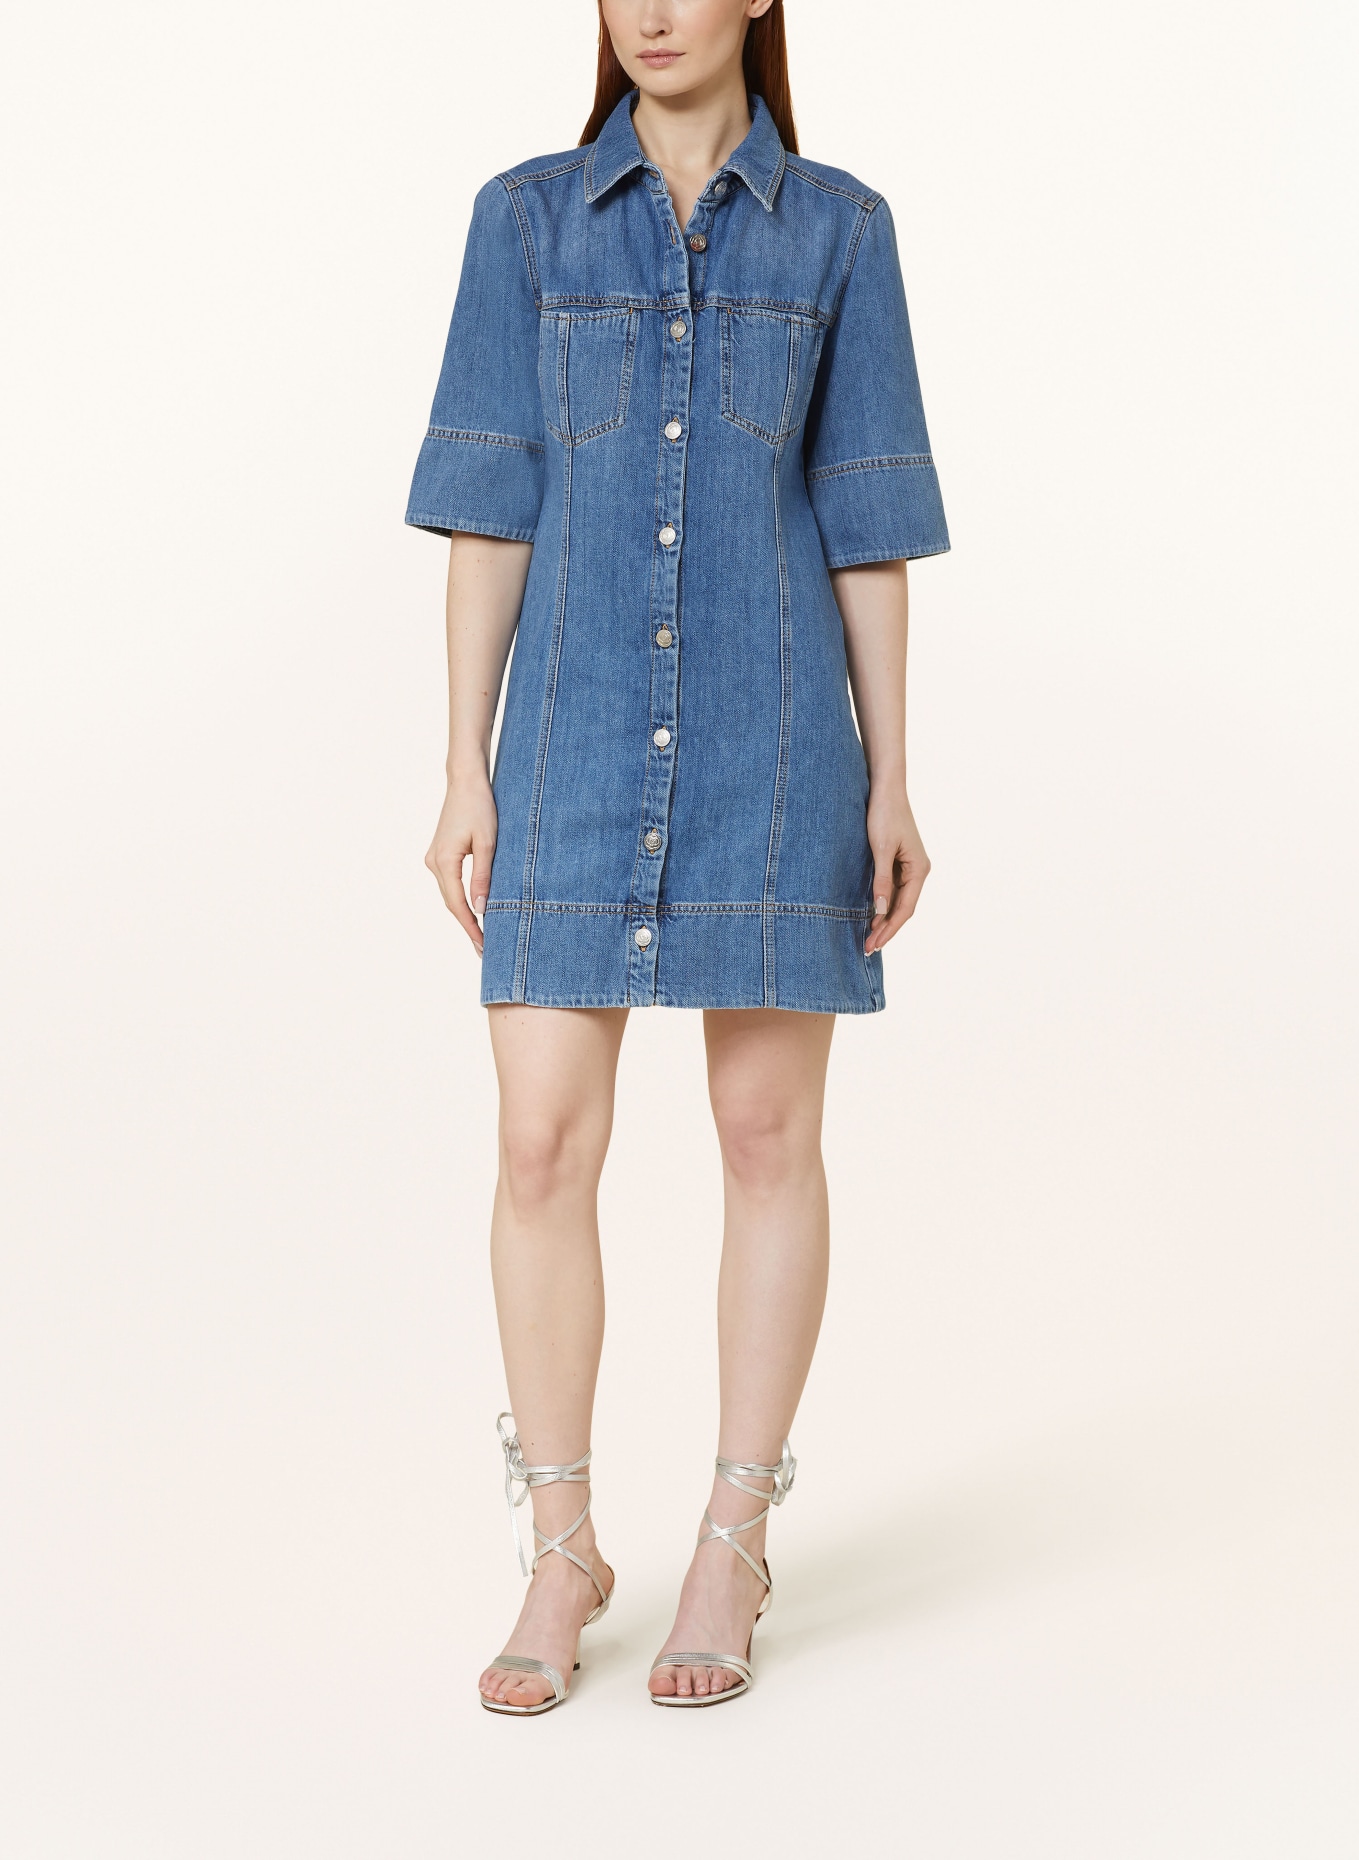 MARELLA Jeanskleid, Farbe: 001  blue jeans (Bild 2)